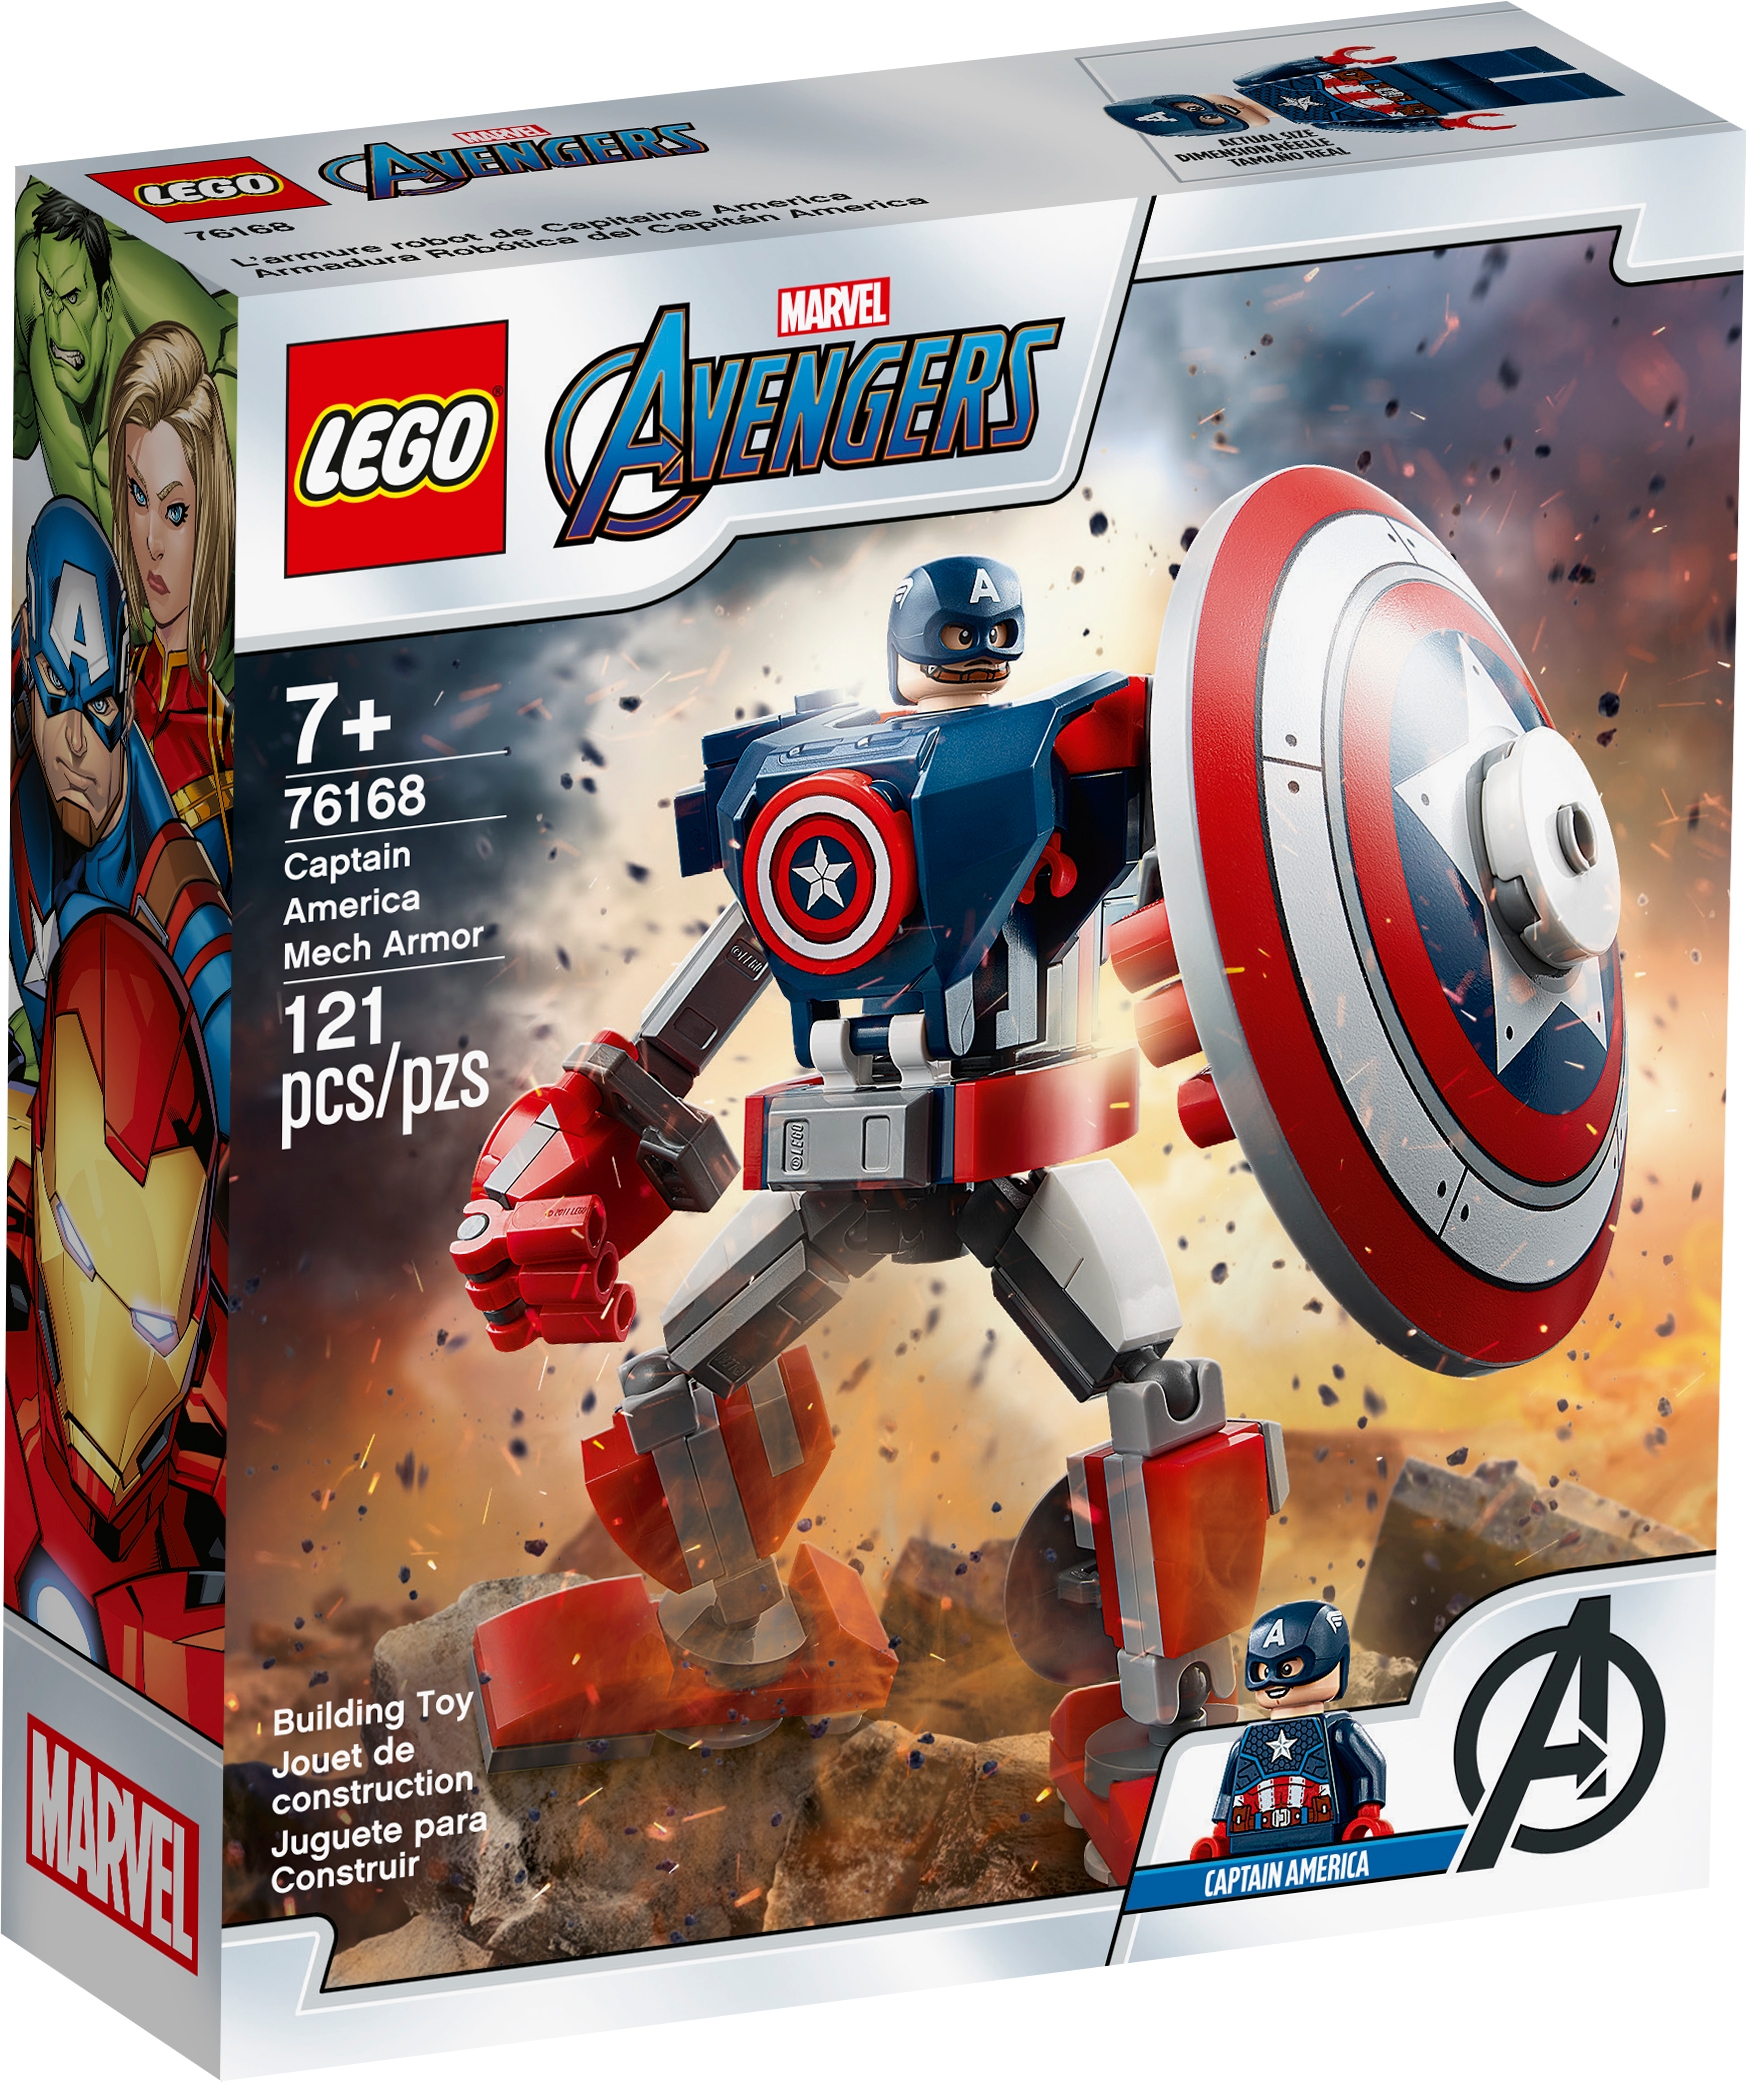 LAST CHANCE TO BUY Lego Brickheadz 41492 Captain America READ DESCRIPTION!